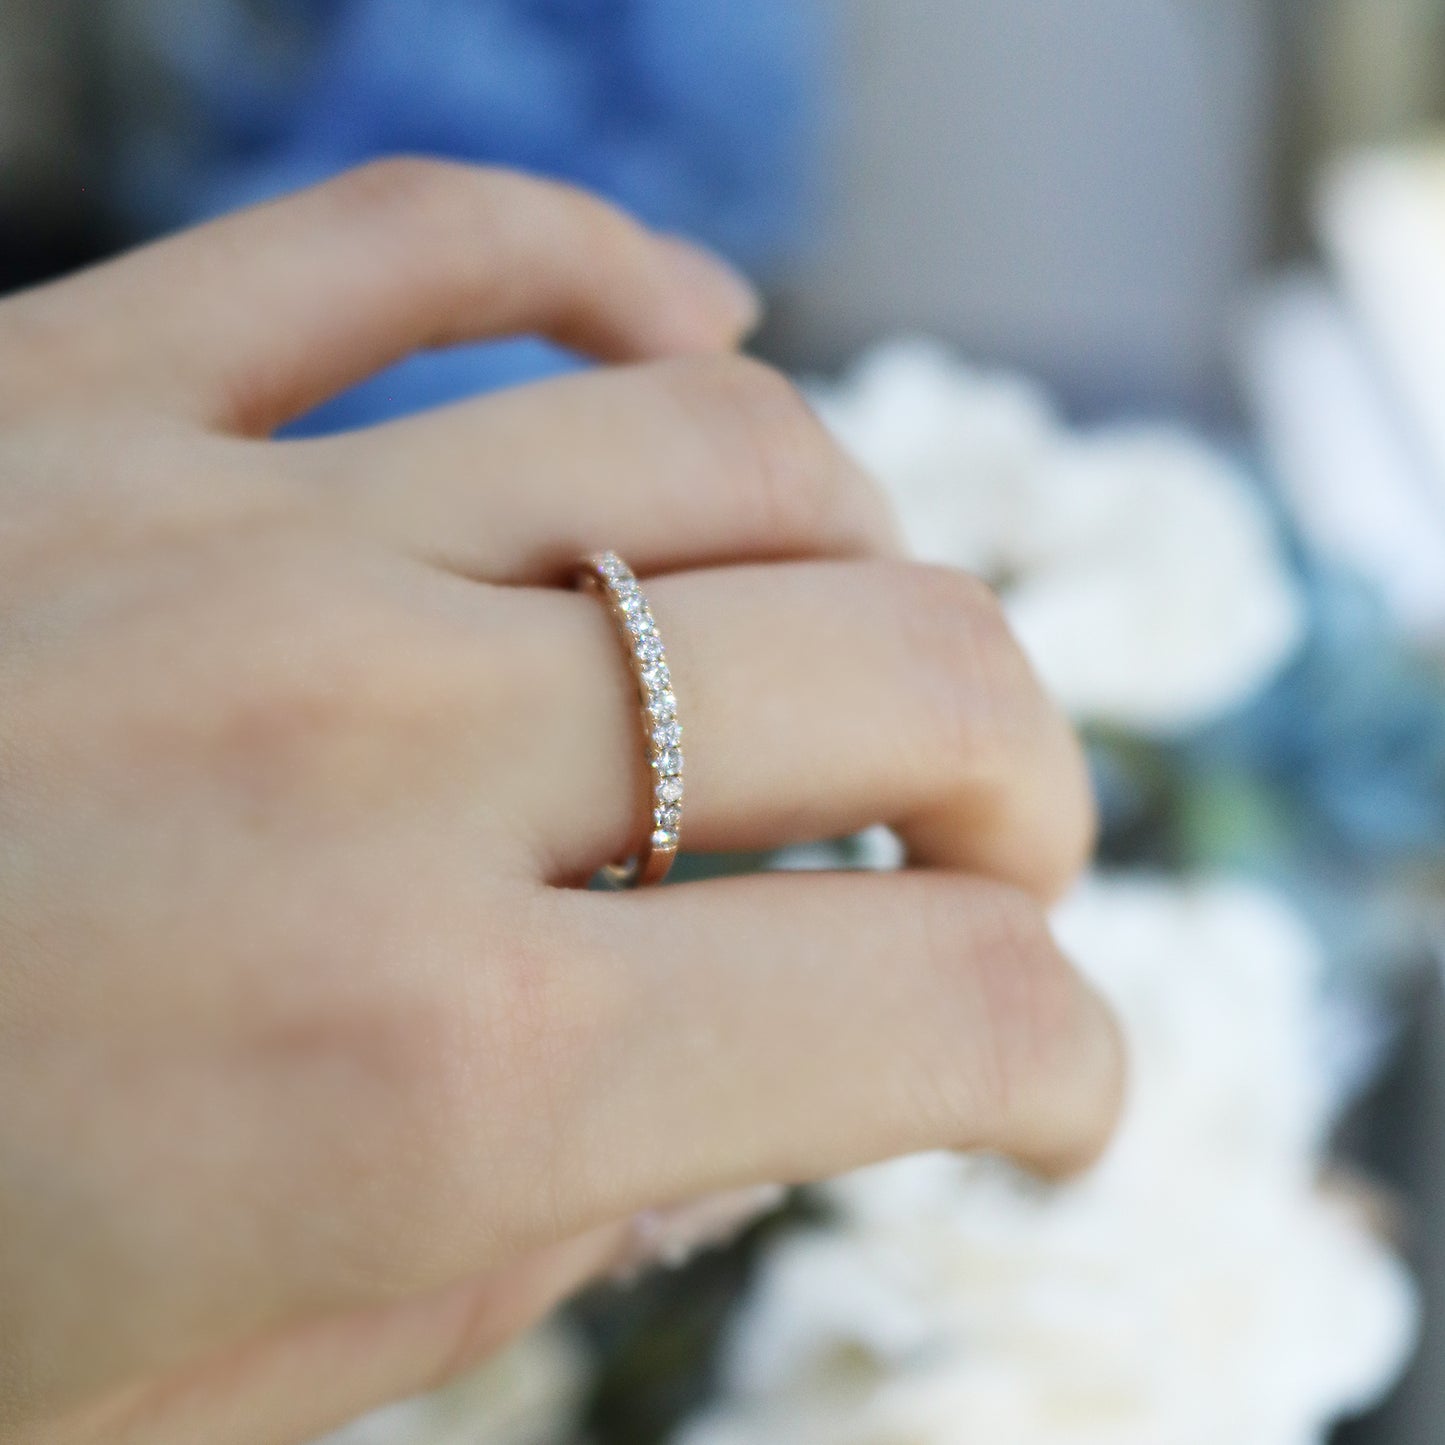 18k玫瑰金三面鑽石蕾絲戒指在中指上 18k Rose Gold 3-Sided Lace Eternity Diamond Ring on middle finger